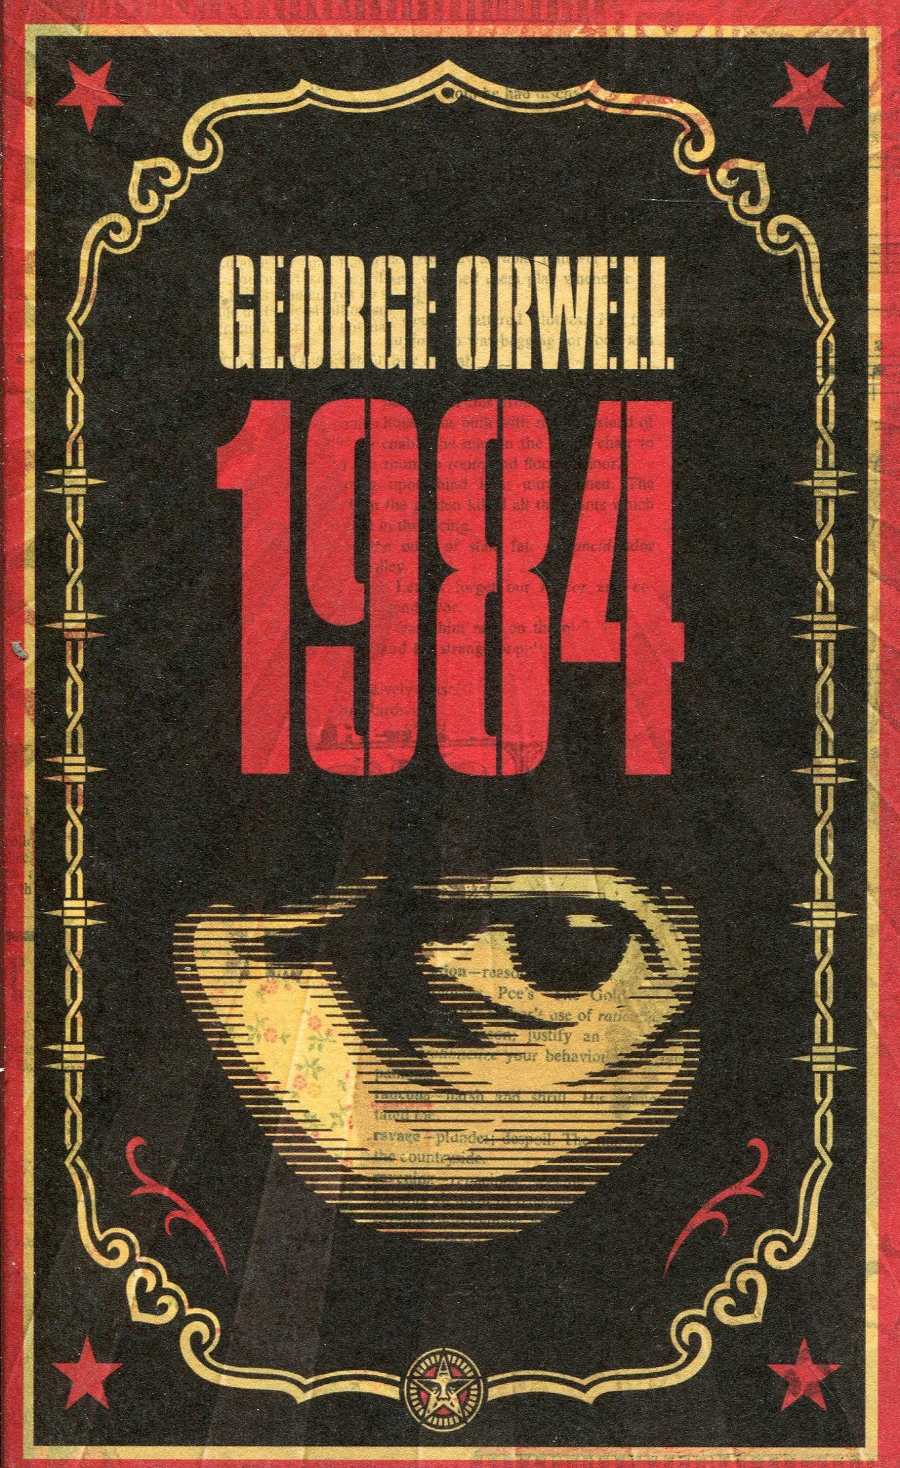 1984 classic book cover